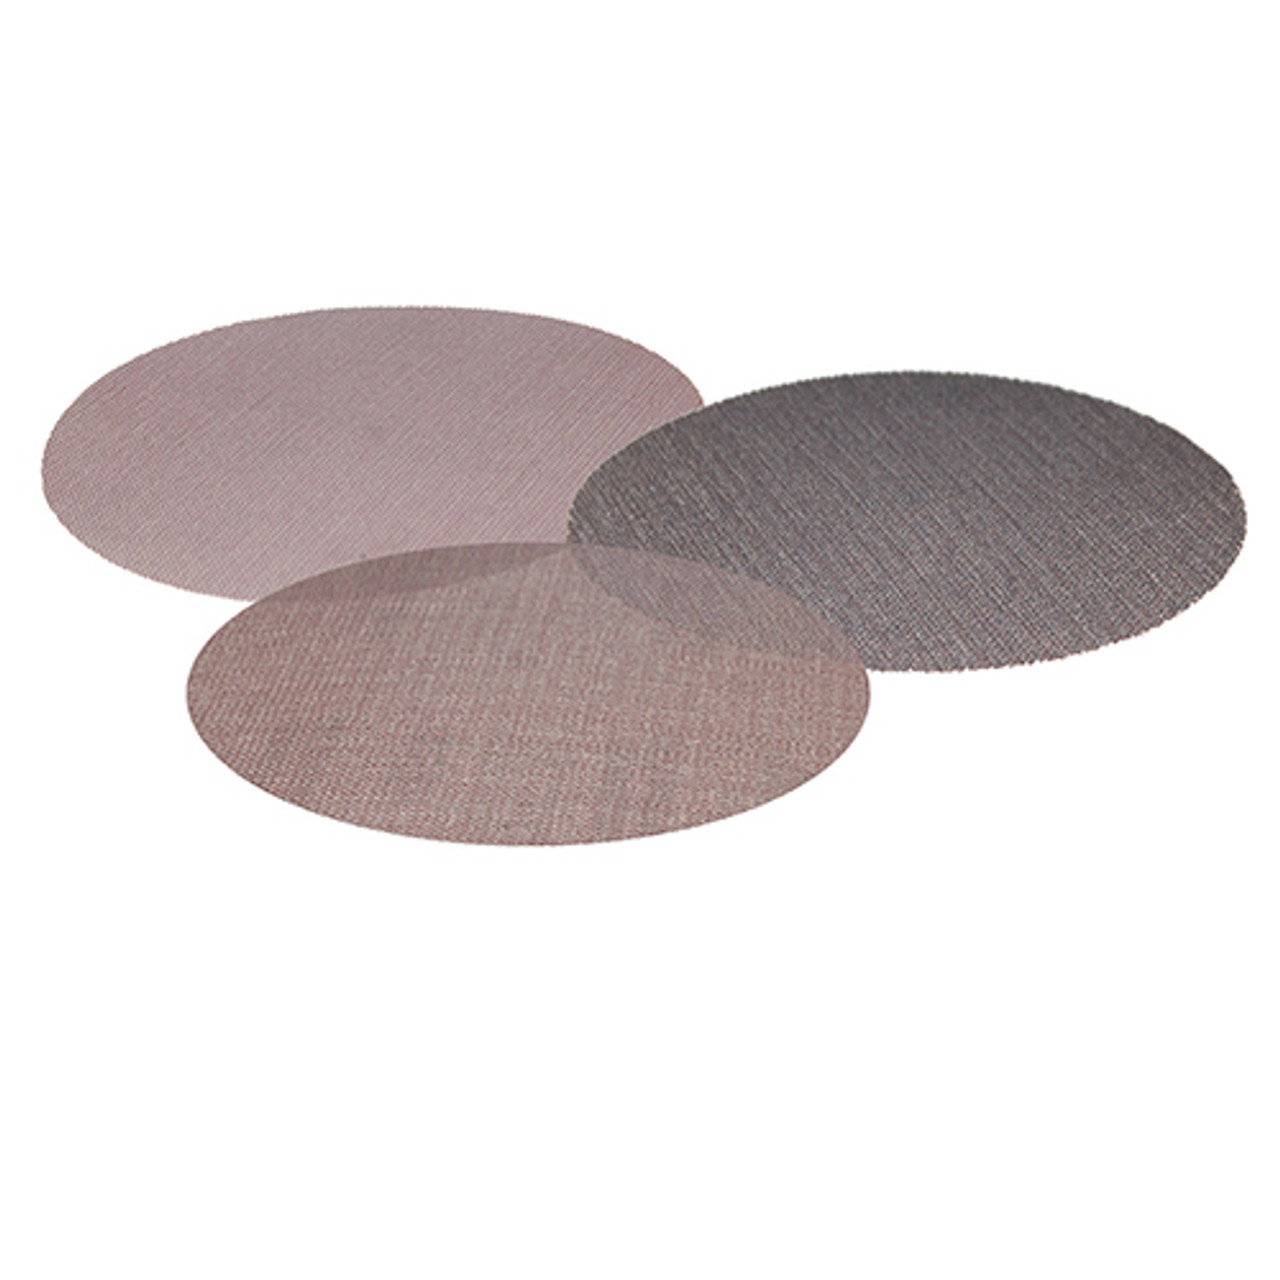 Klingspor Abrasives Klingnet, 320 Grit, Aluminum Oxide, Hook & Loop, 6" Discs, 25pk